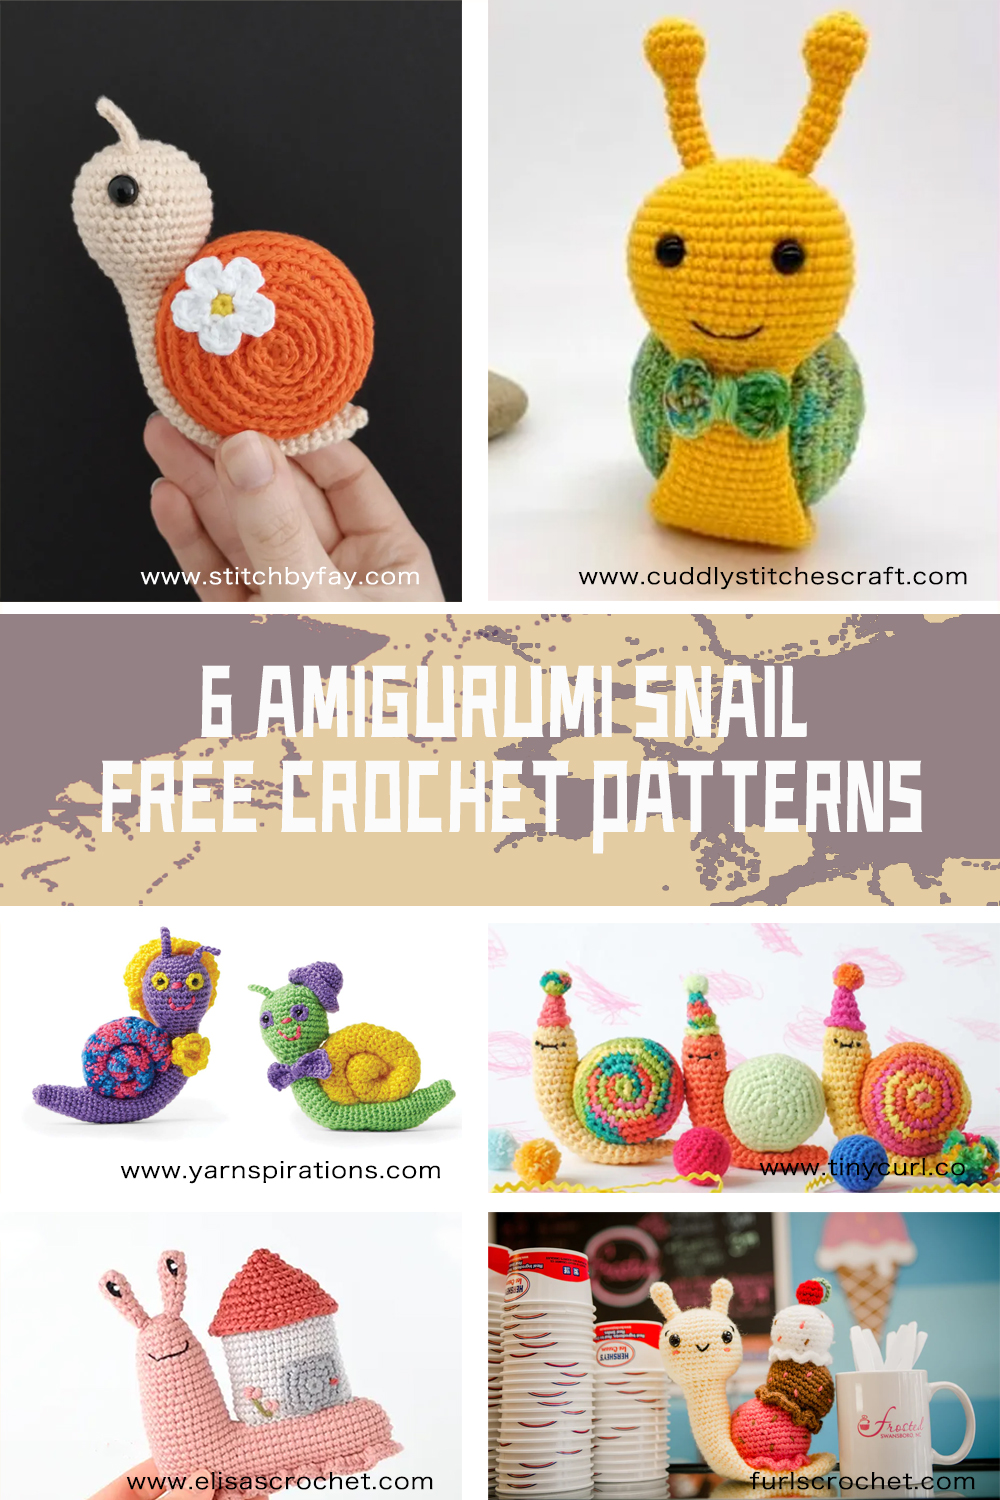 6 Crochet Amigurumi Snail FREE Patterns 